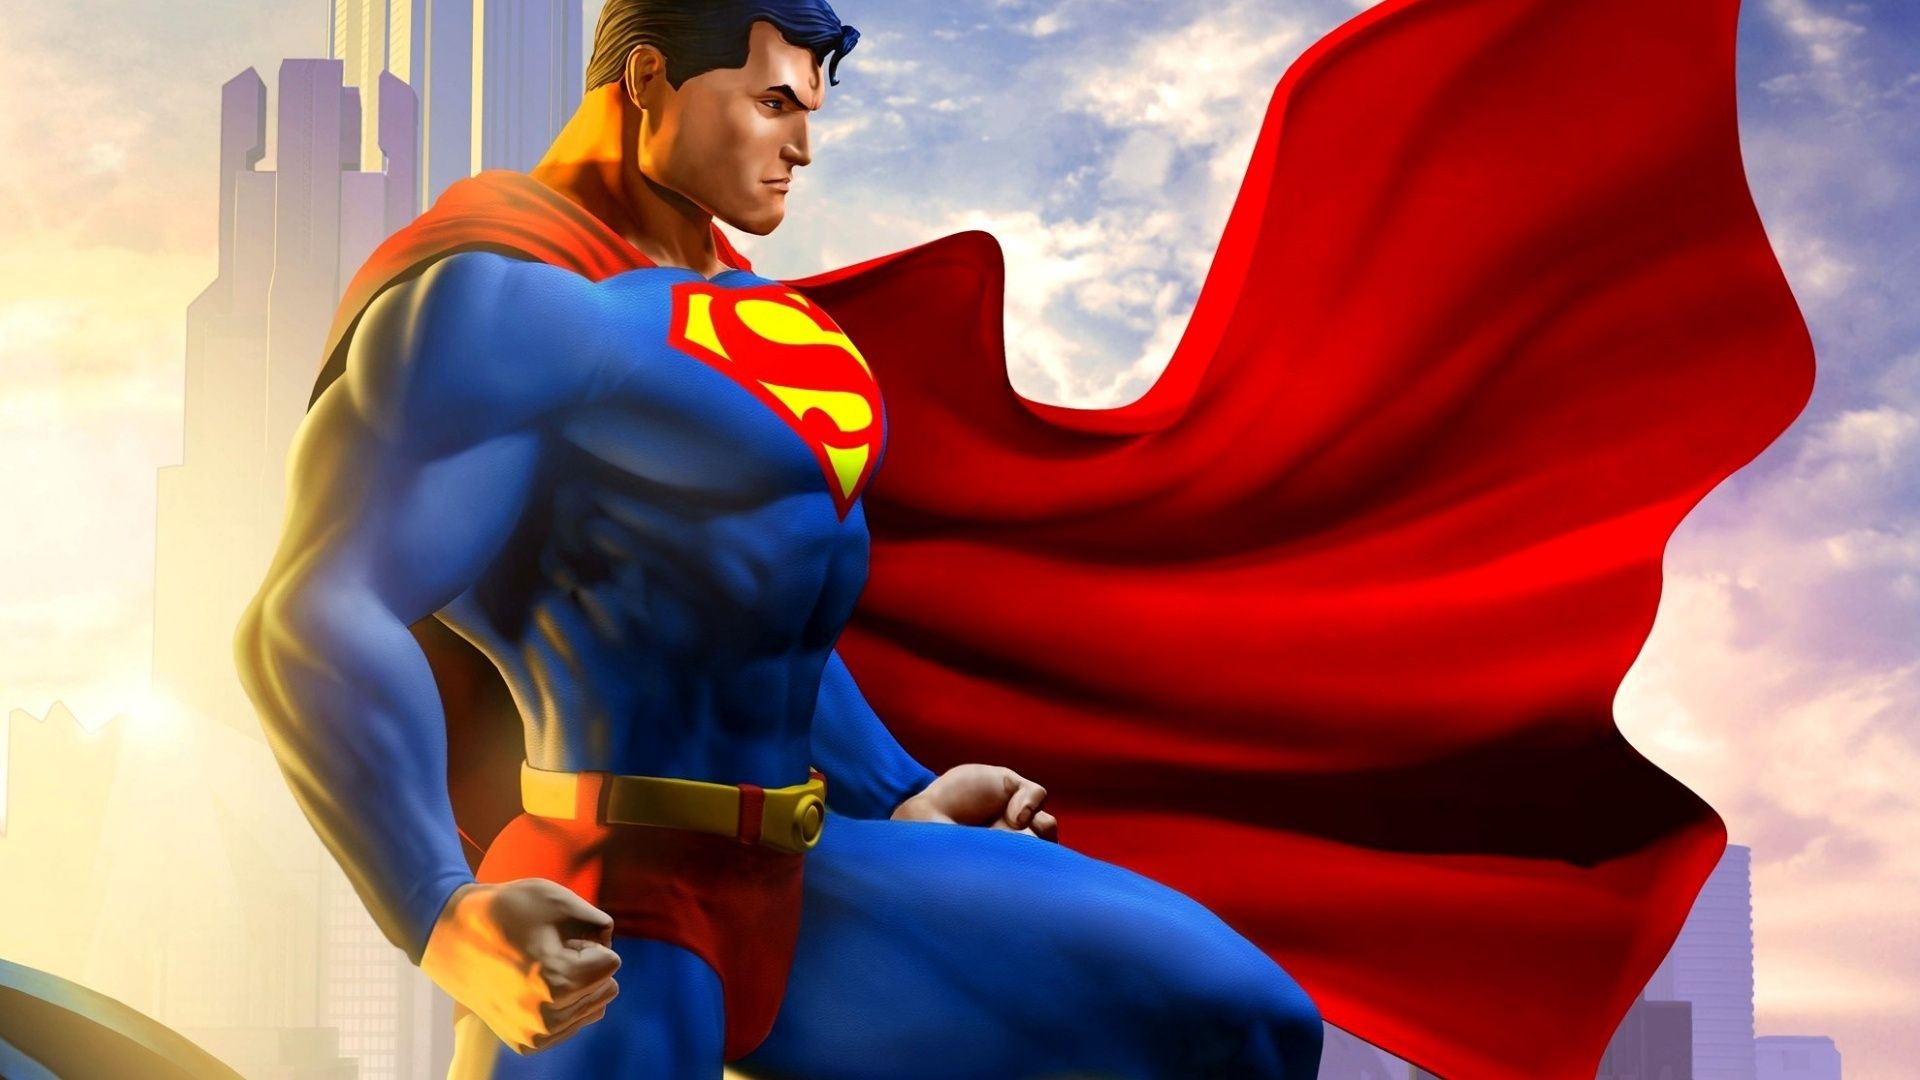 Superman concept art